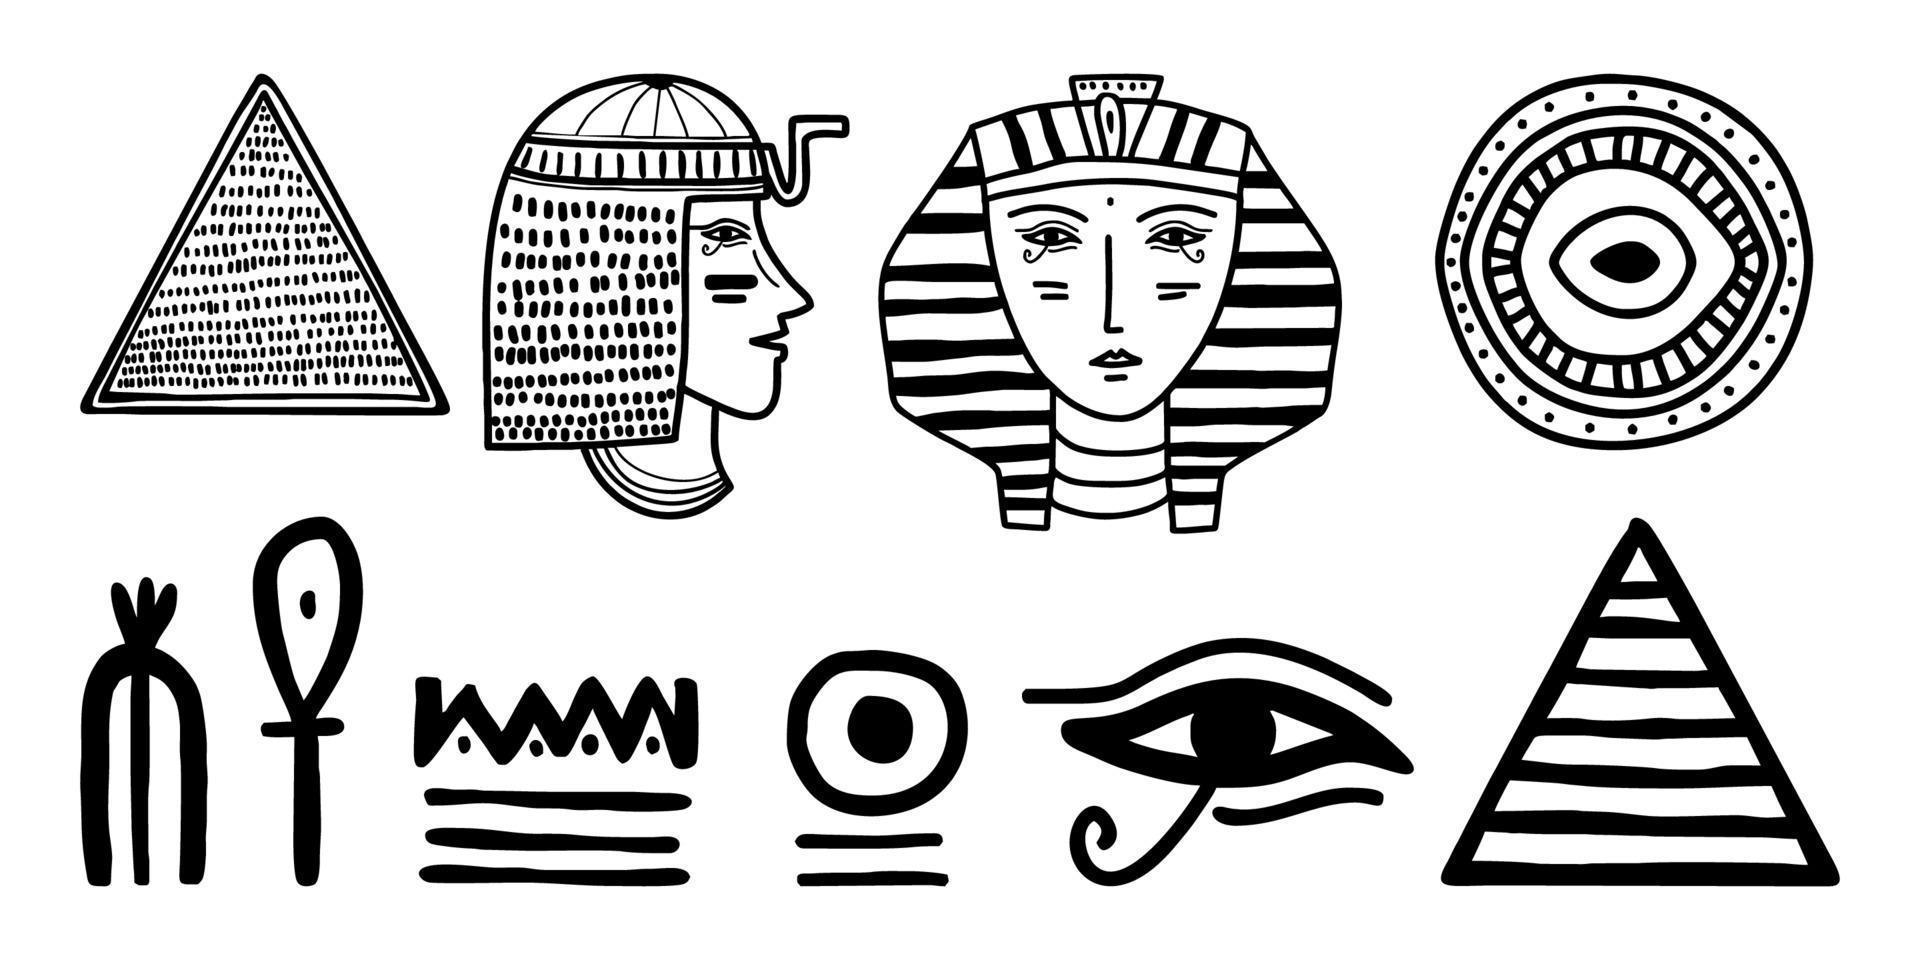 icono étnico egipcio del arte tribal. Egipto dibujo dibujos animados  dibujados a mano siluetas negras aisladas sobre fondo blanco. 1946678  Vector en Vecteezy